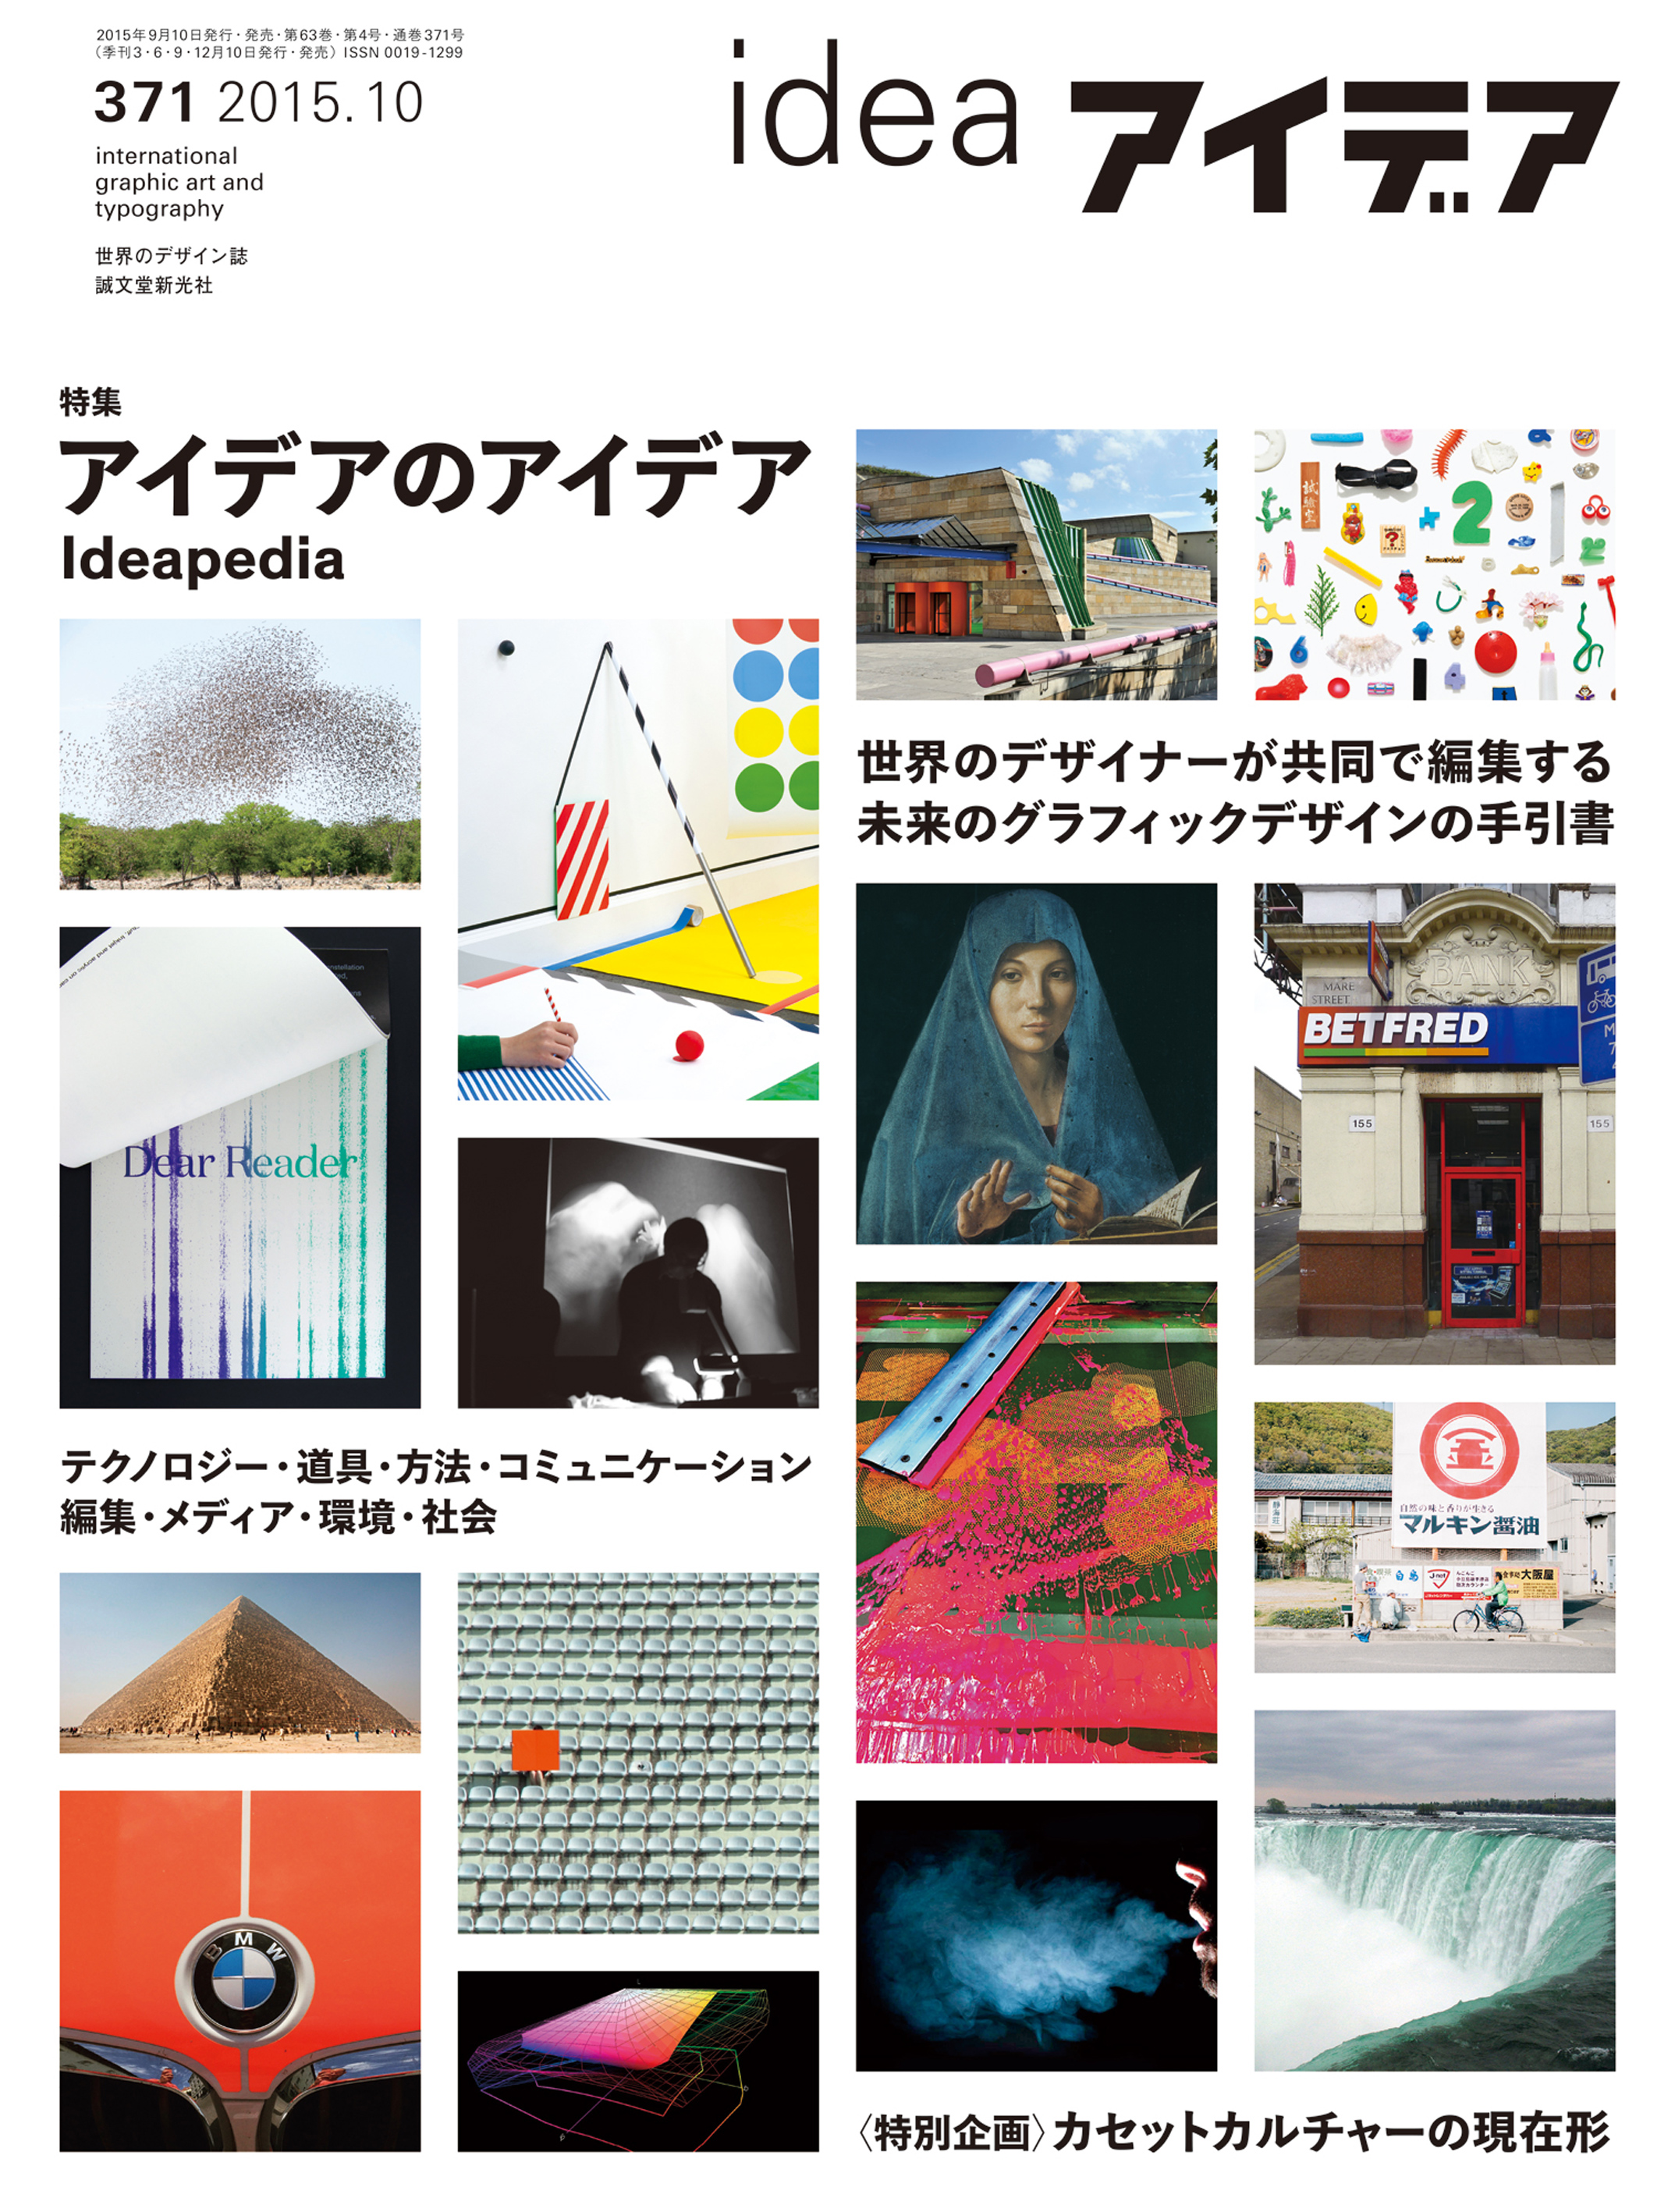 IDEA Magazine | IDEA Magazine - international graphic art and